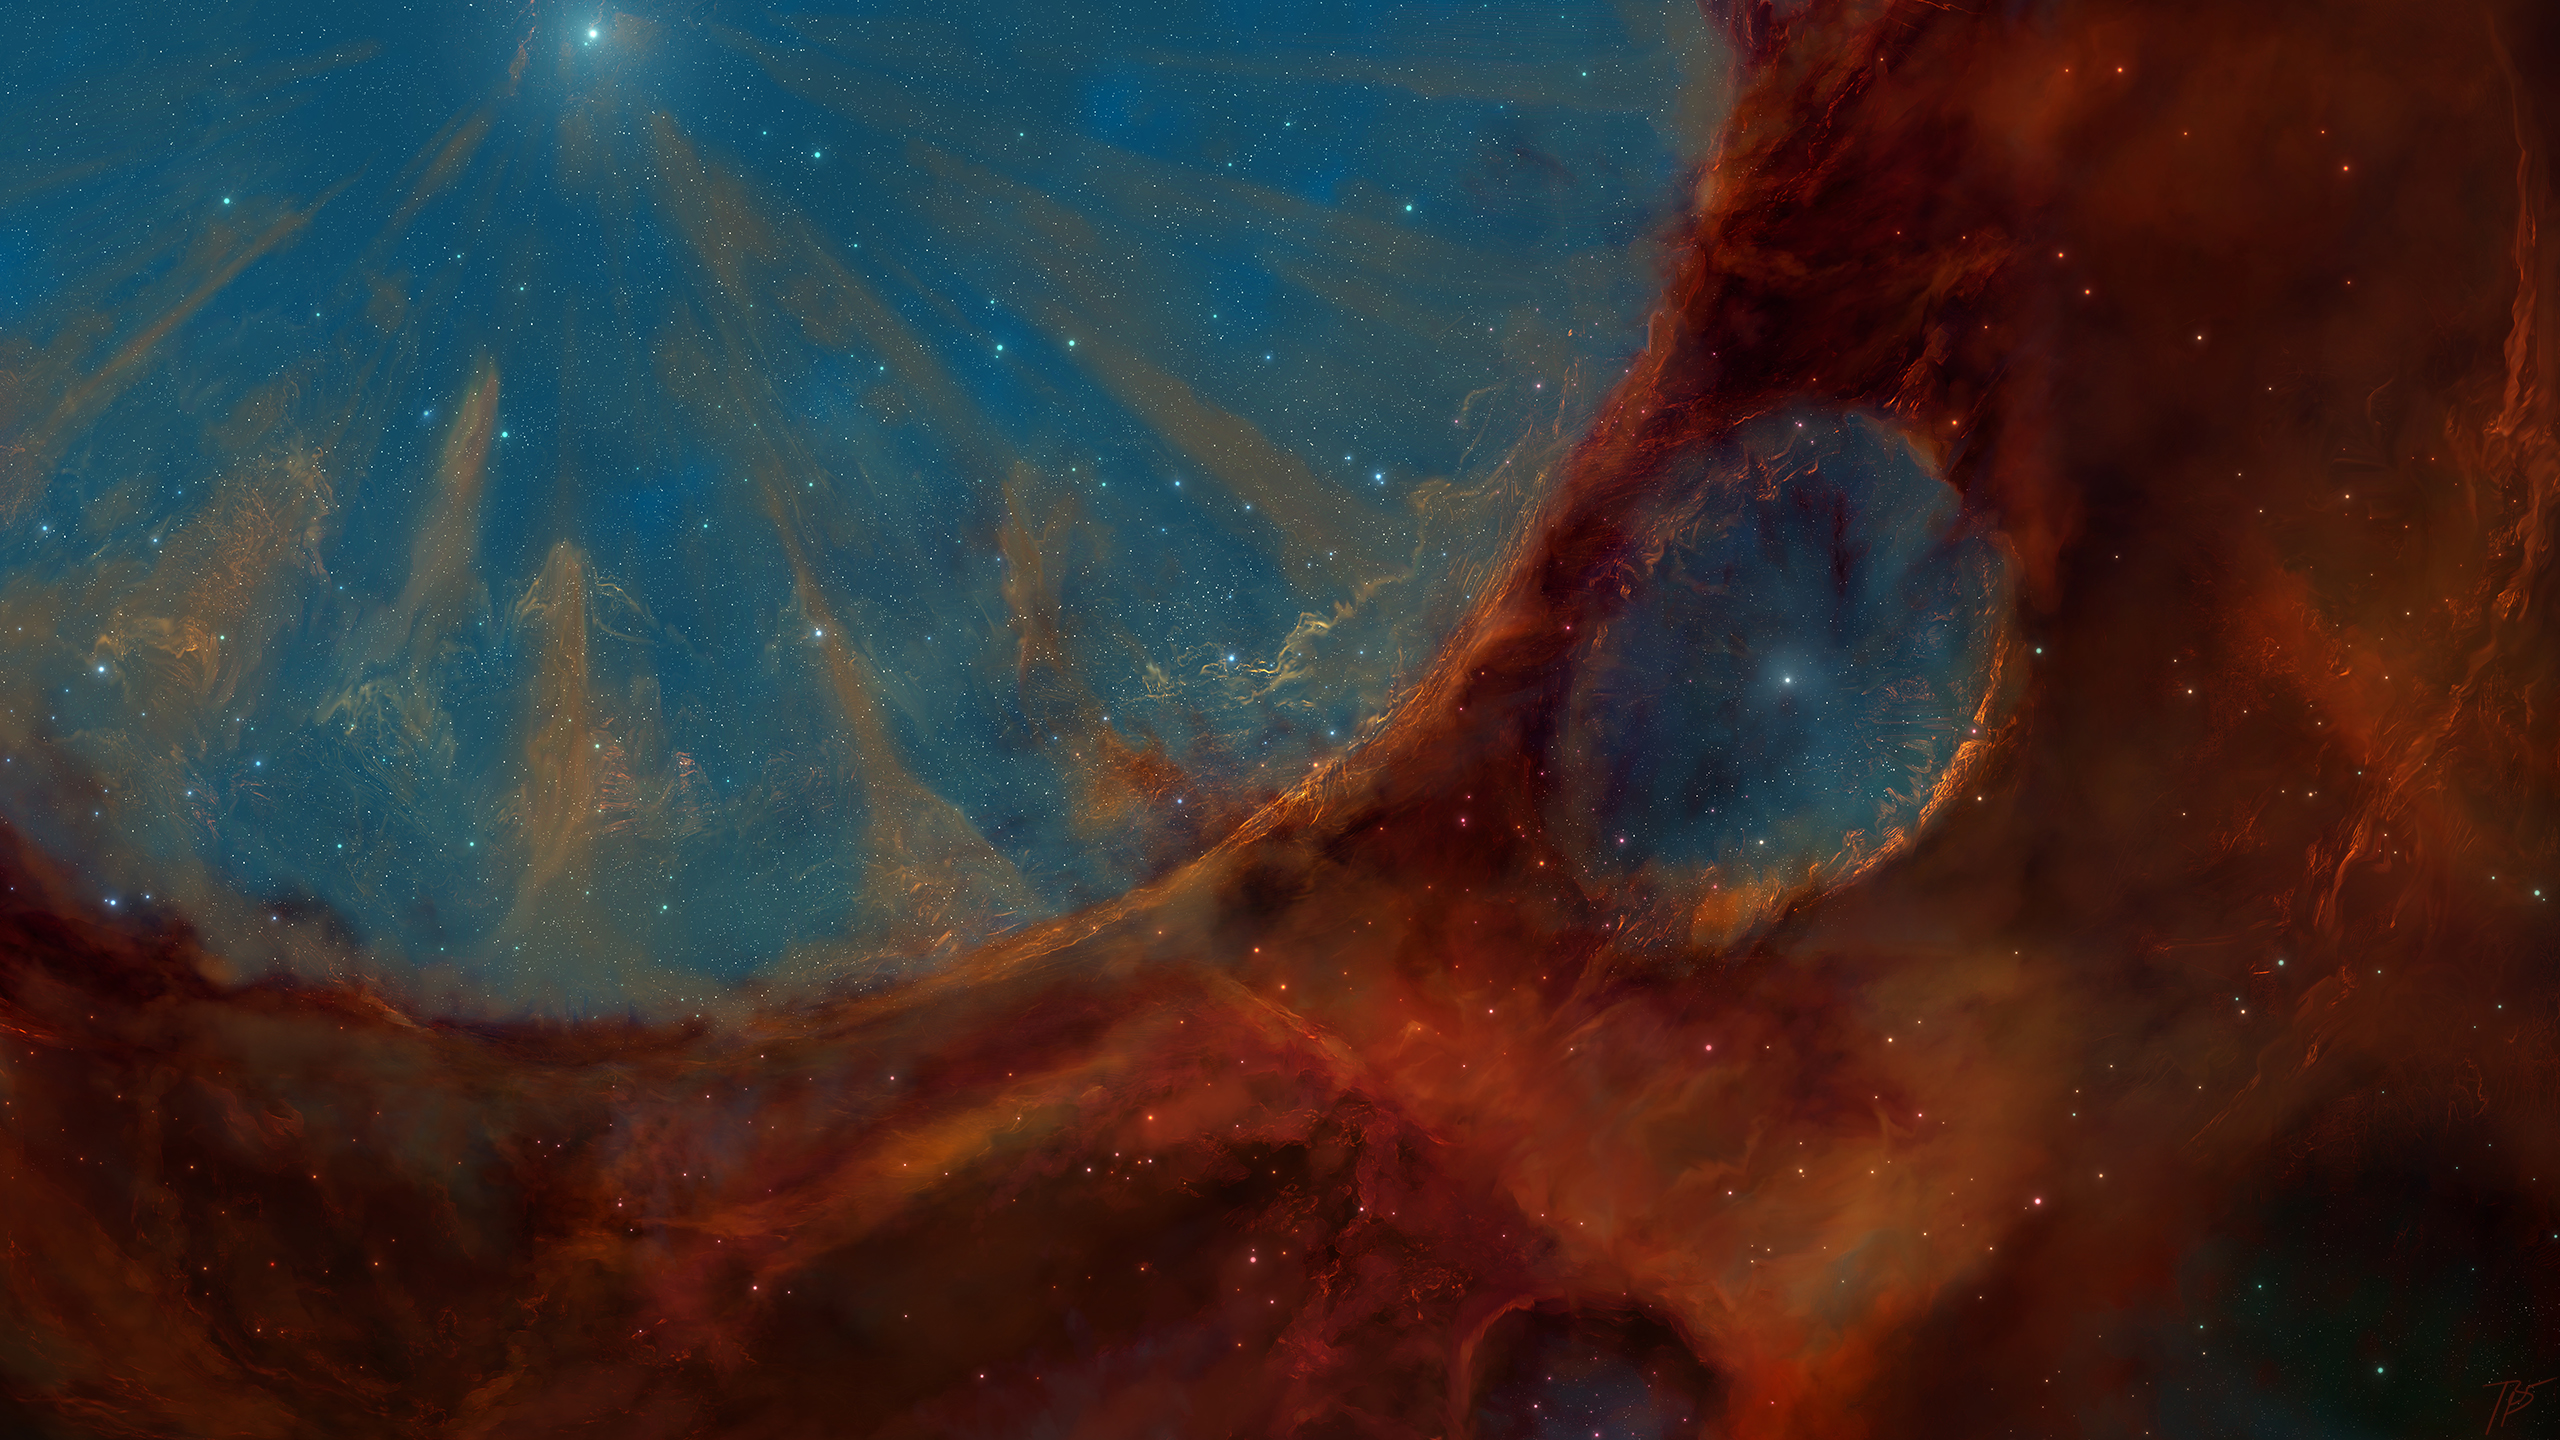 General 2560x1440 JoeyJazz space art planetary nebula